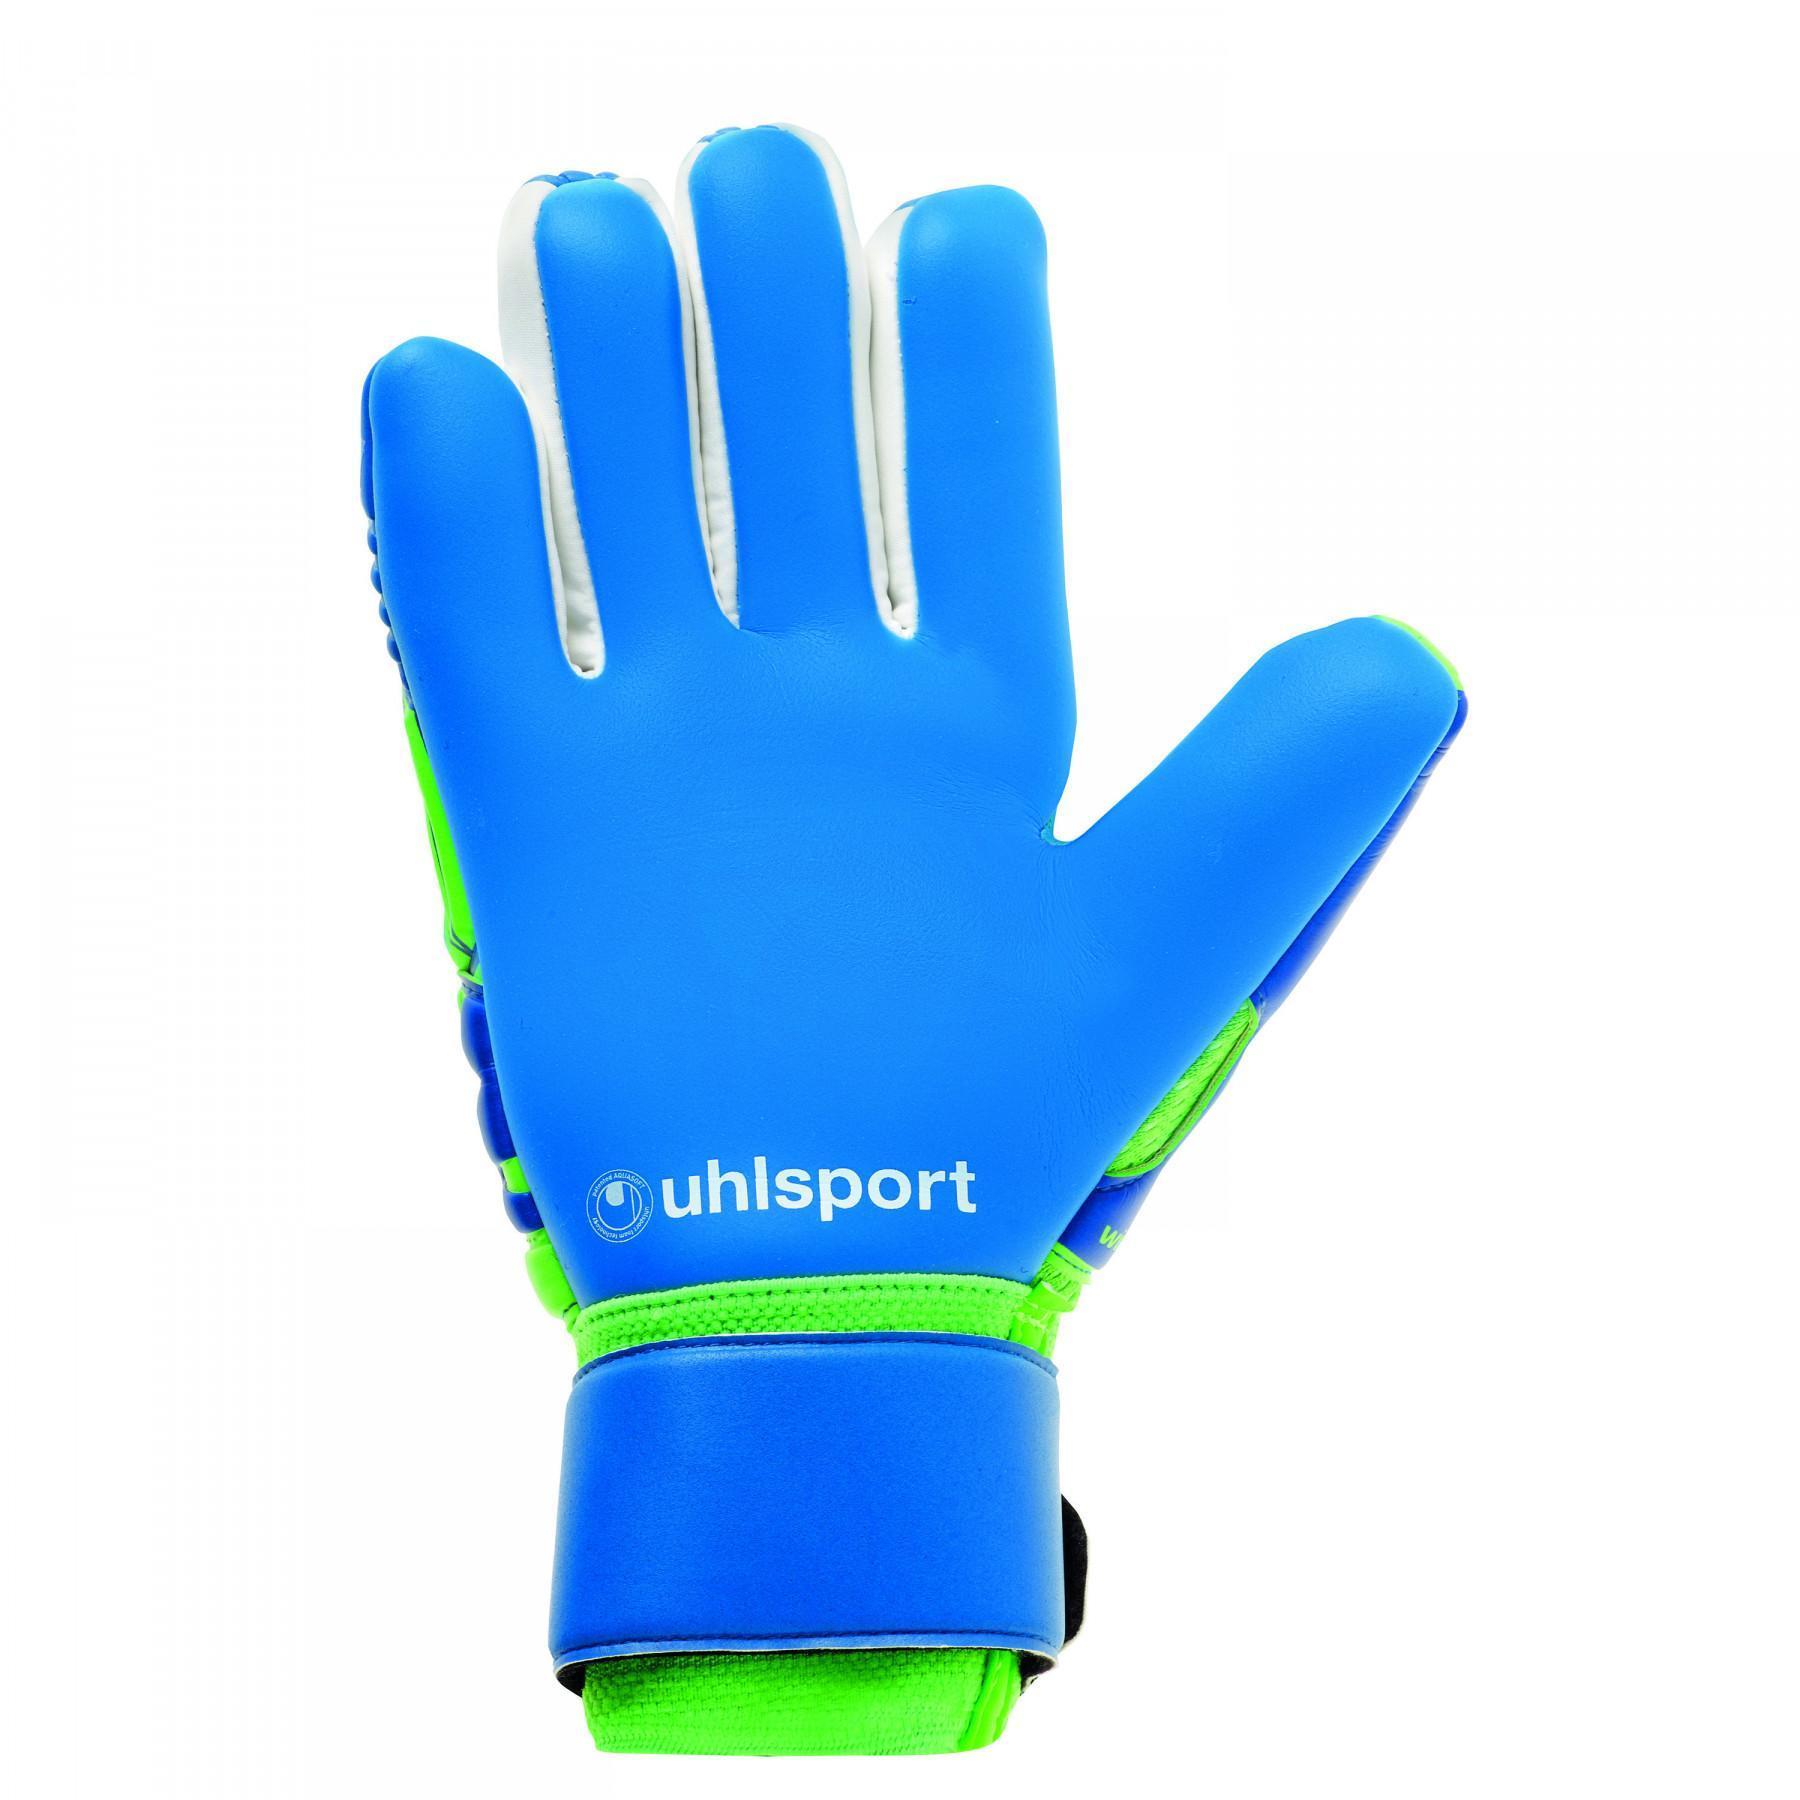 Goalkeeper gloves Uhlsport HN Windbreaker Aquasoft